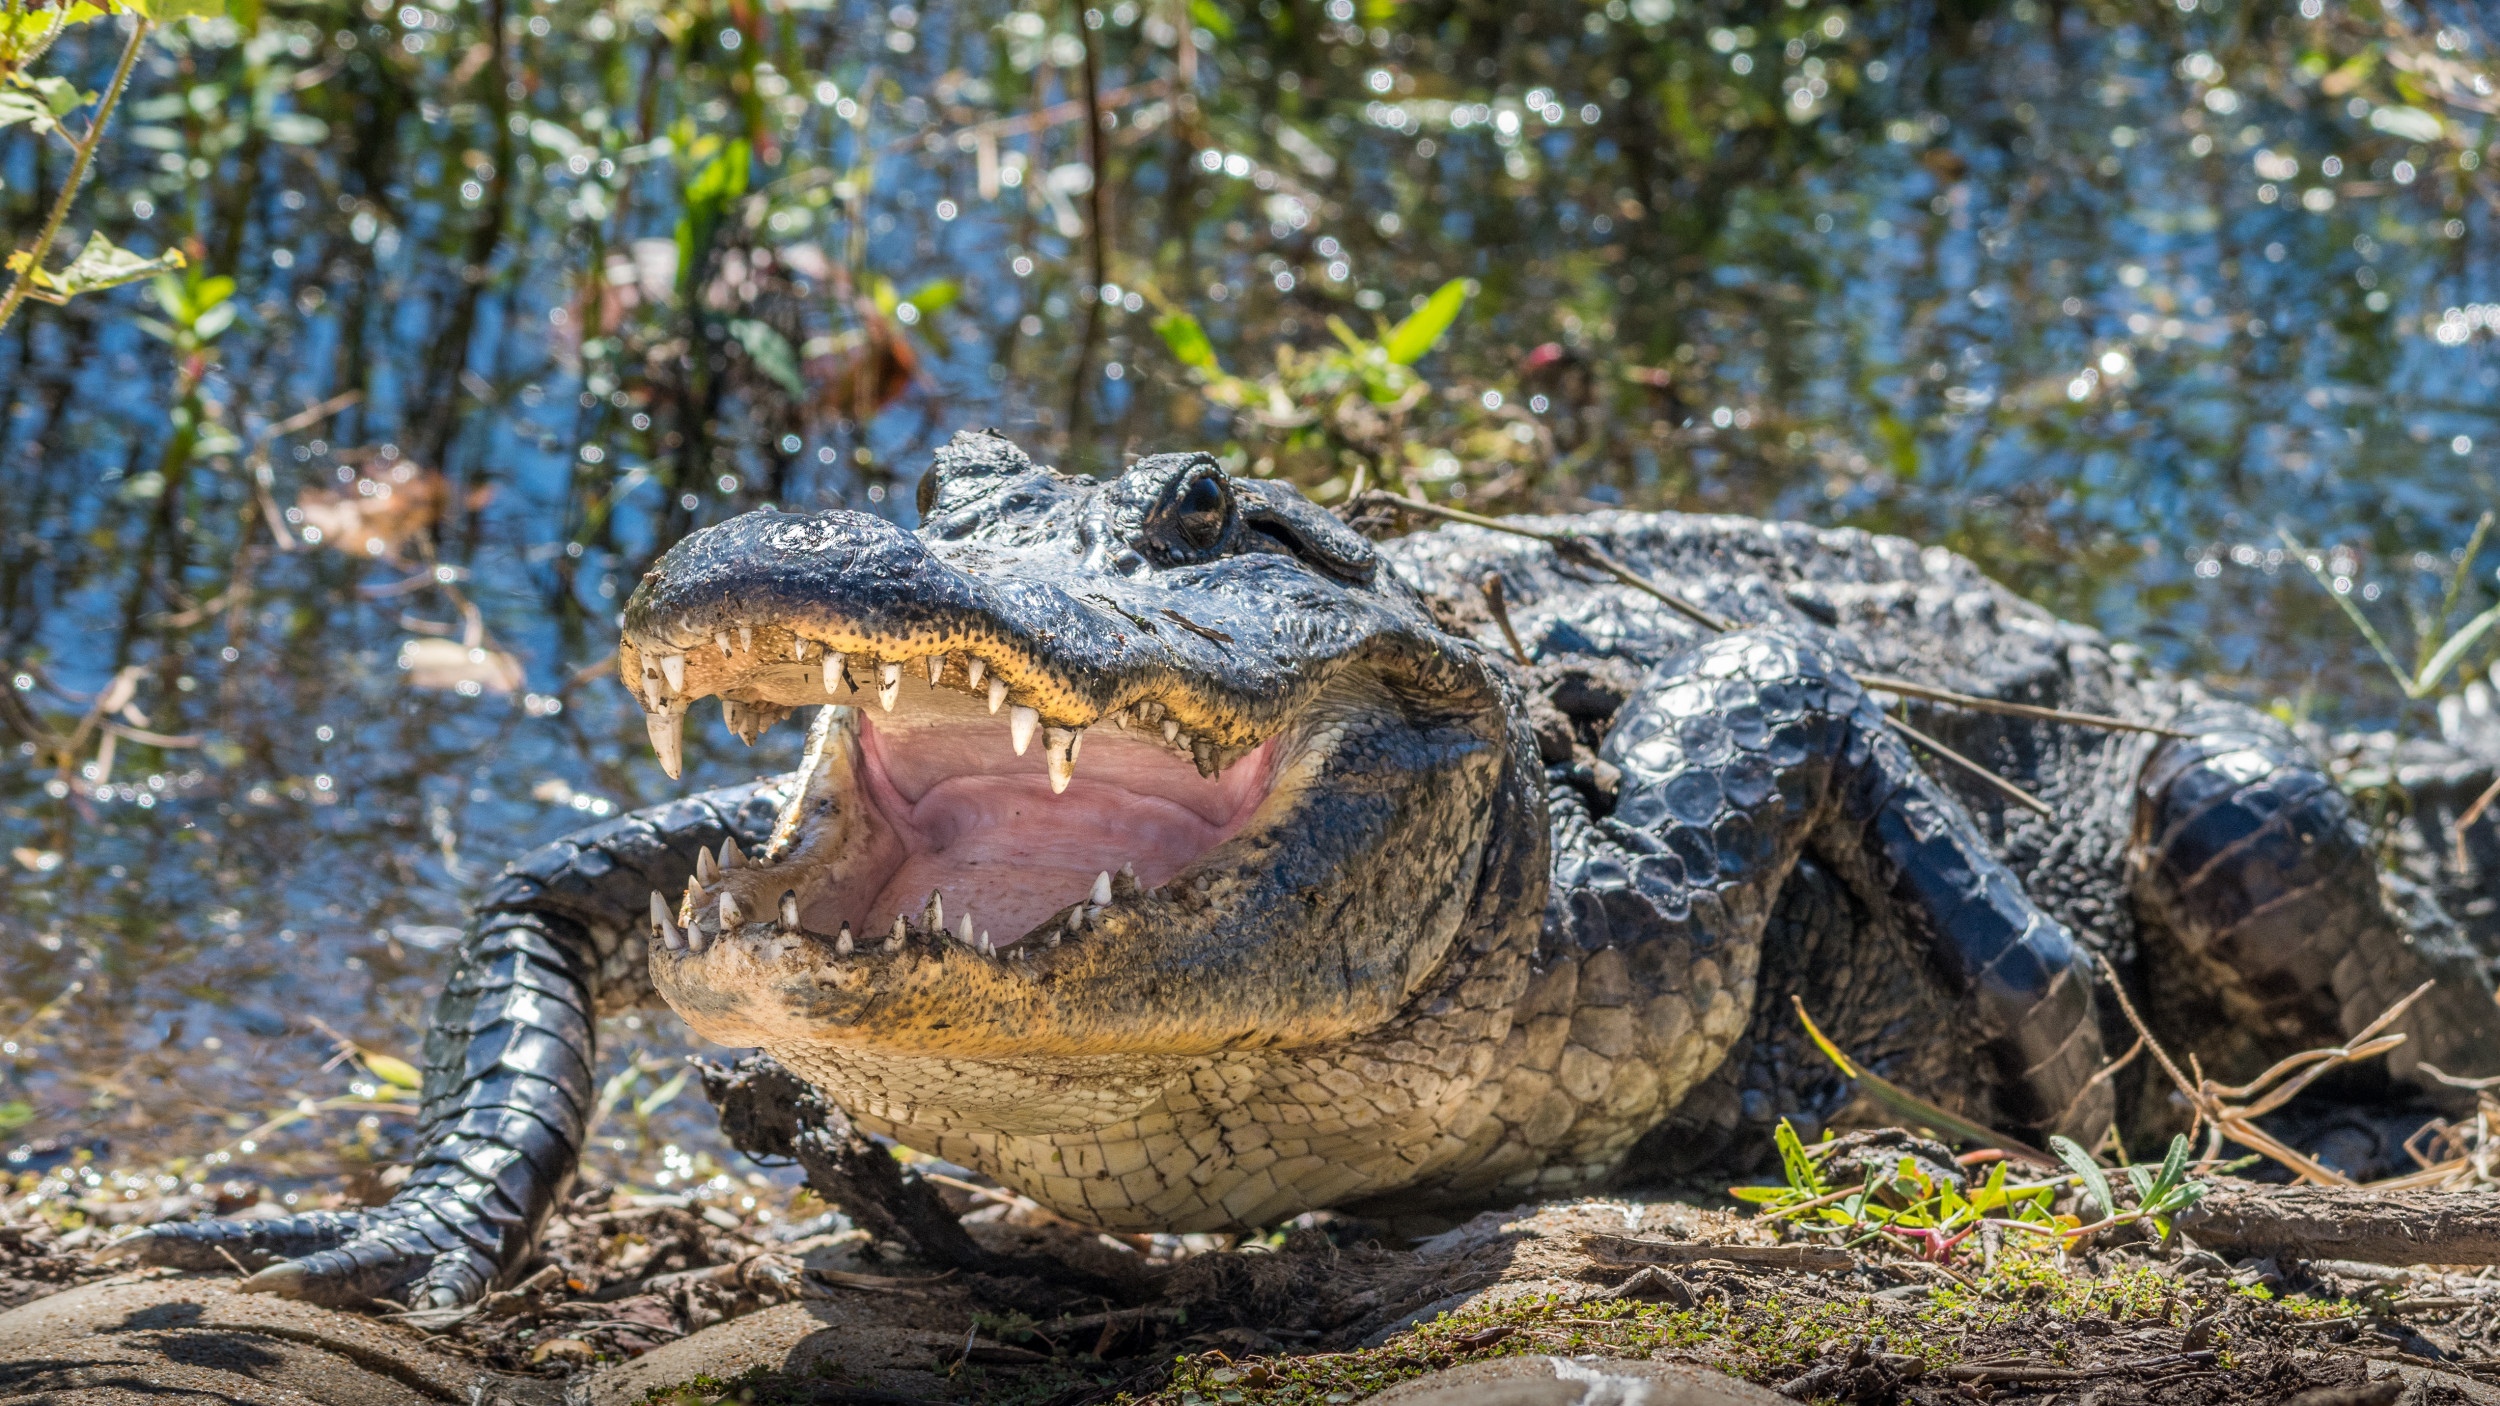 Gigantic 11 Foot Alligator Spotted Walking Through Neighborhood Video